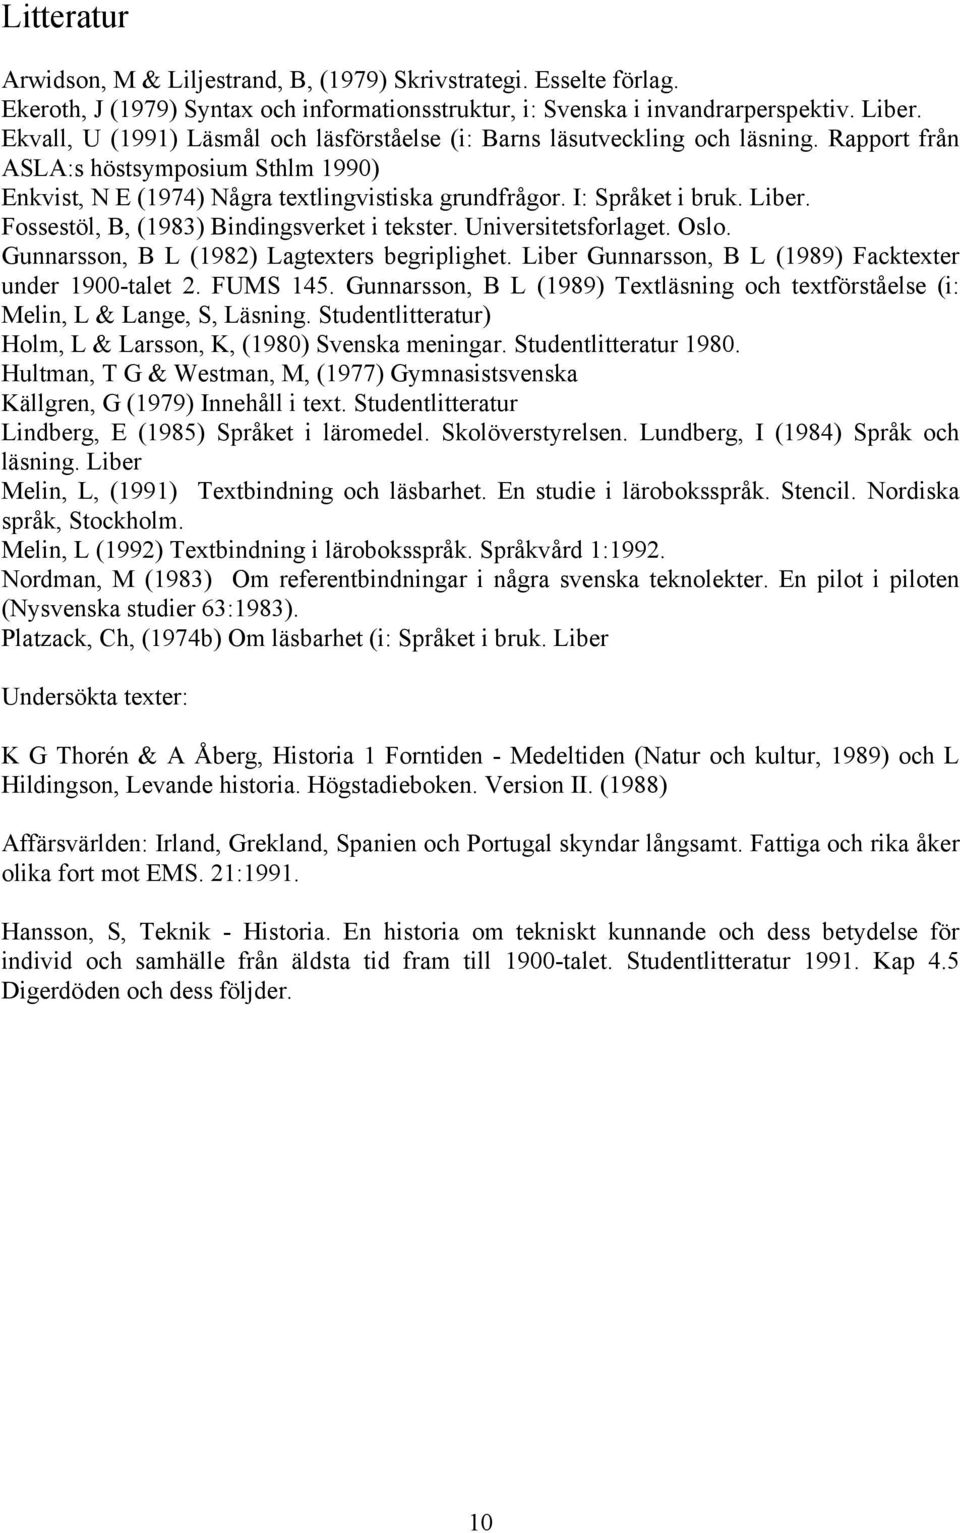 Liber. Fossestöl, B, (1983) Bindingsverket i tekster. Universitetsforlaget. Oslo. Gunnarsson, B L (1982) Lagtexters begriplighet. Liber Gunnarsson, B L (1989) Facktexter under 1900-talet 2. FUMS 145.